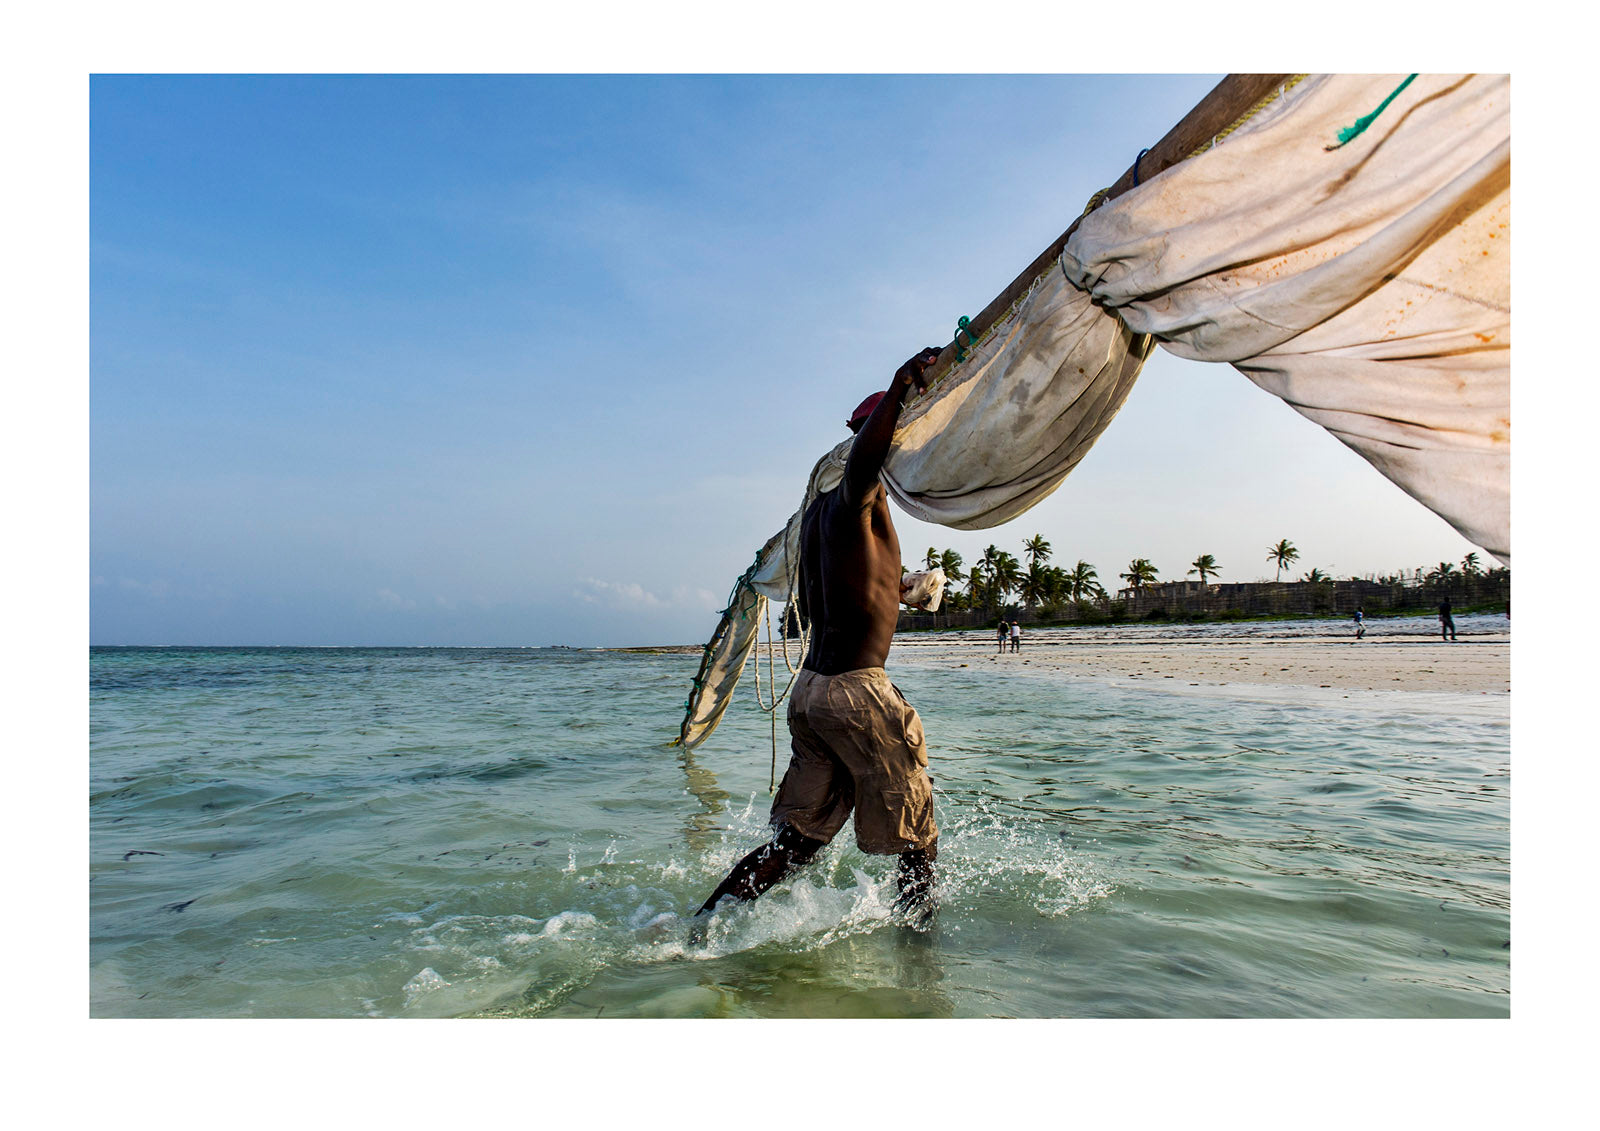 A fisherman carries the tarpaulin sail and mast from his wooden trimaran sailing dhow to shore at sunset. Bwejuu, Unguja Island, Zanzibar, Tanzania, Africa.